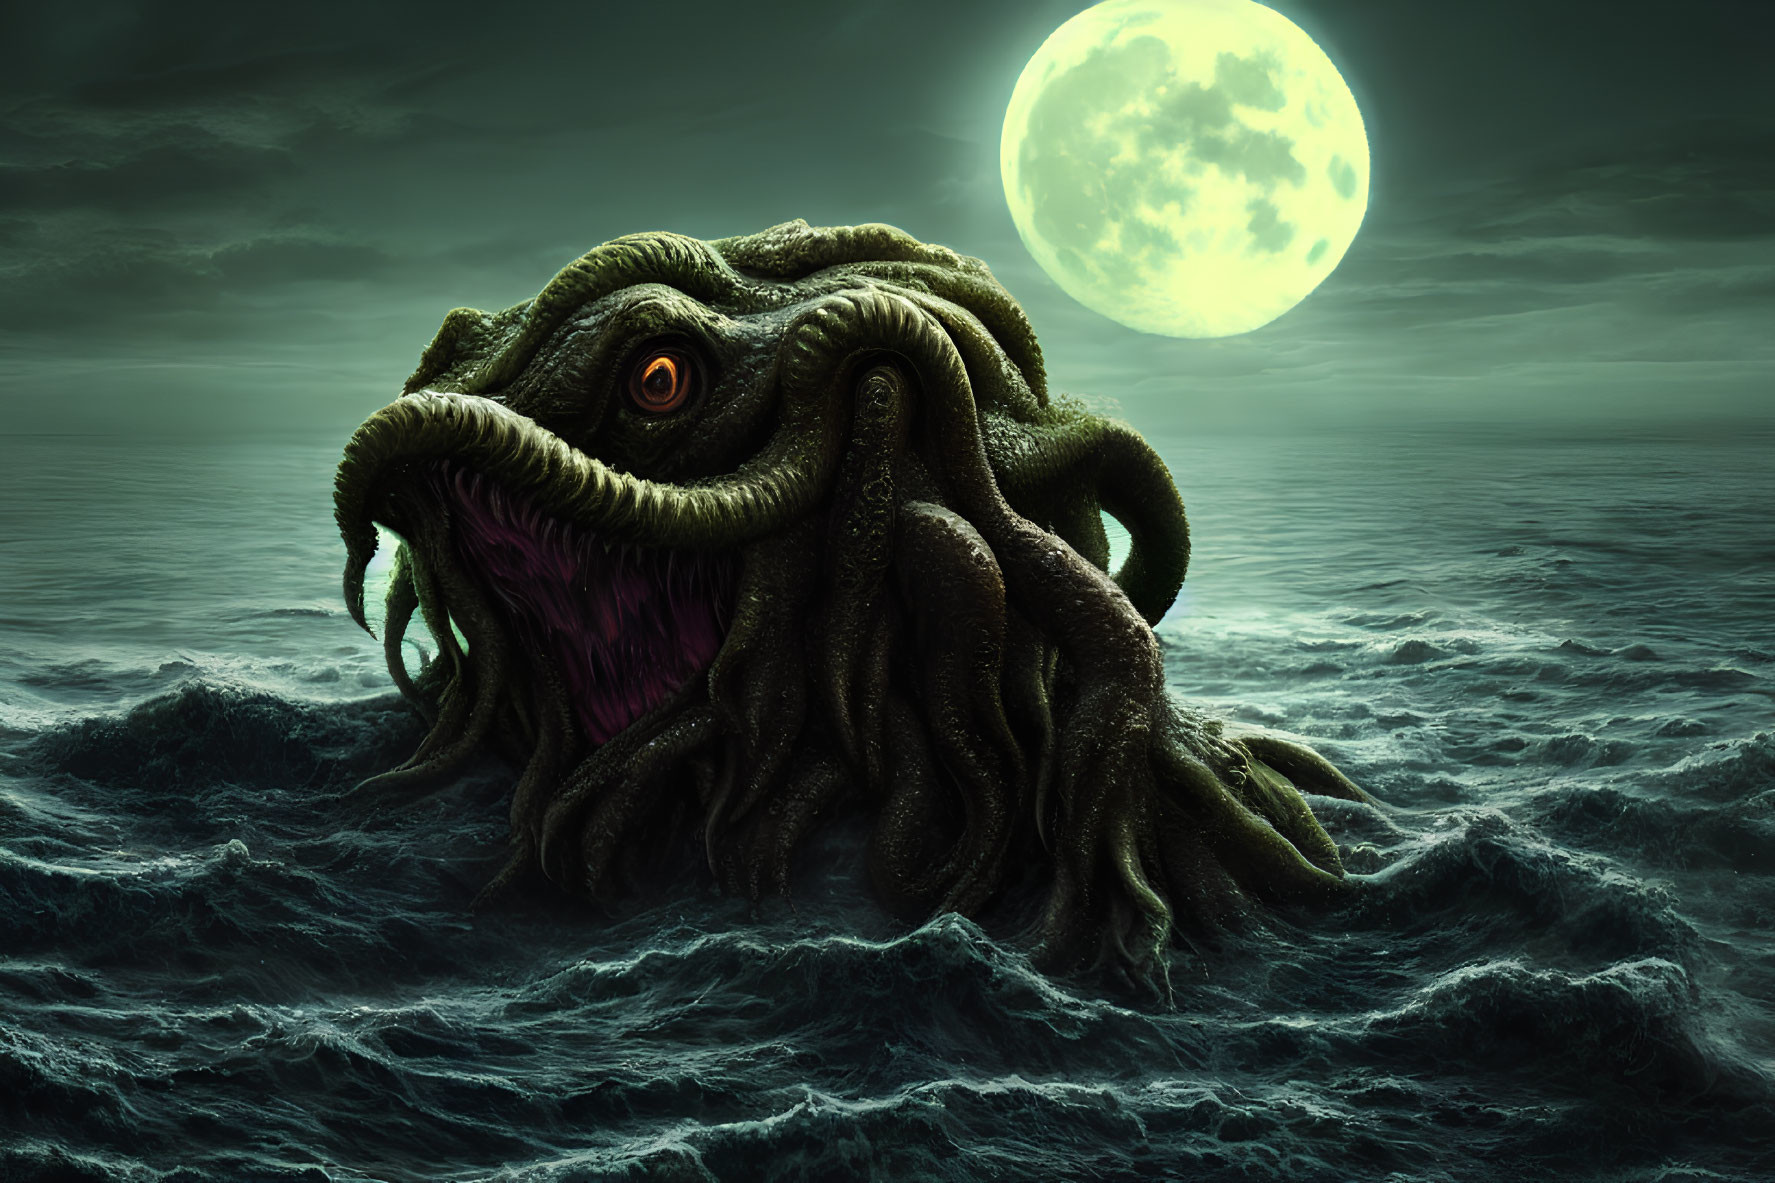 Monstrous sea creature with tentacles and single eye in dark ocean waves